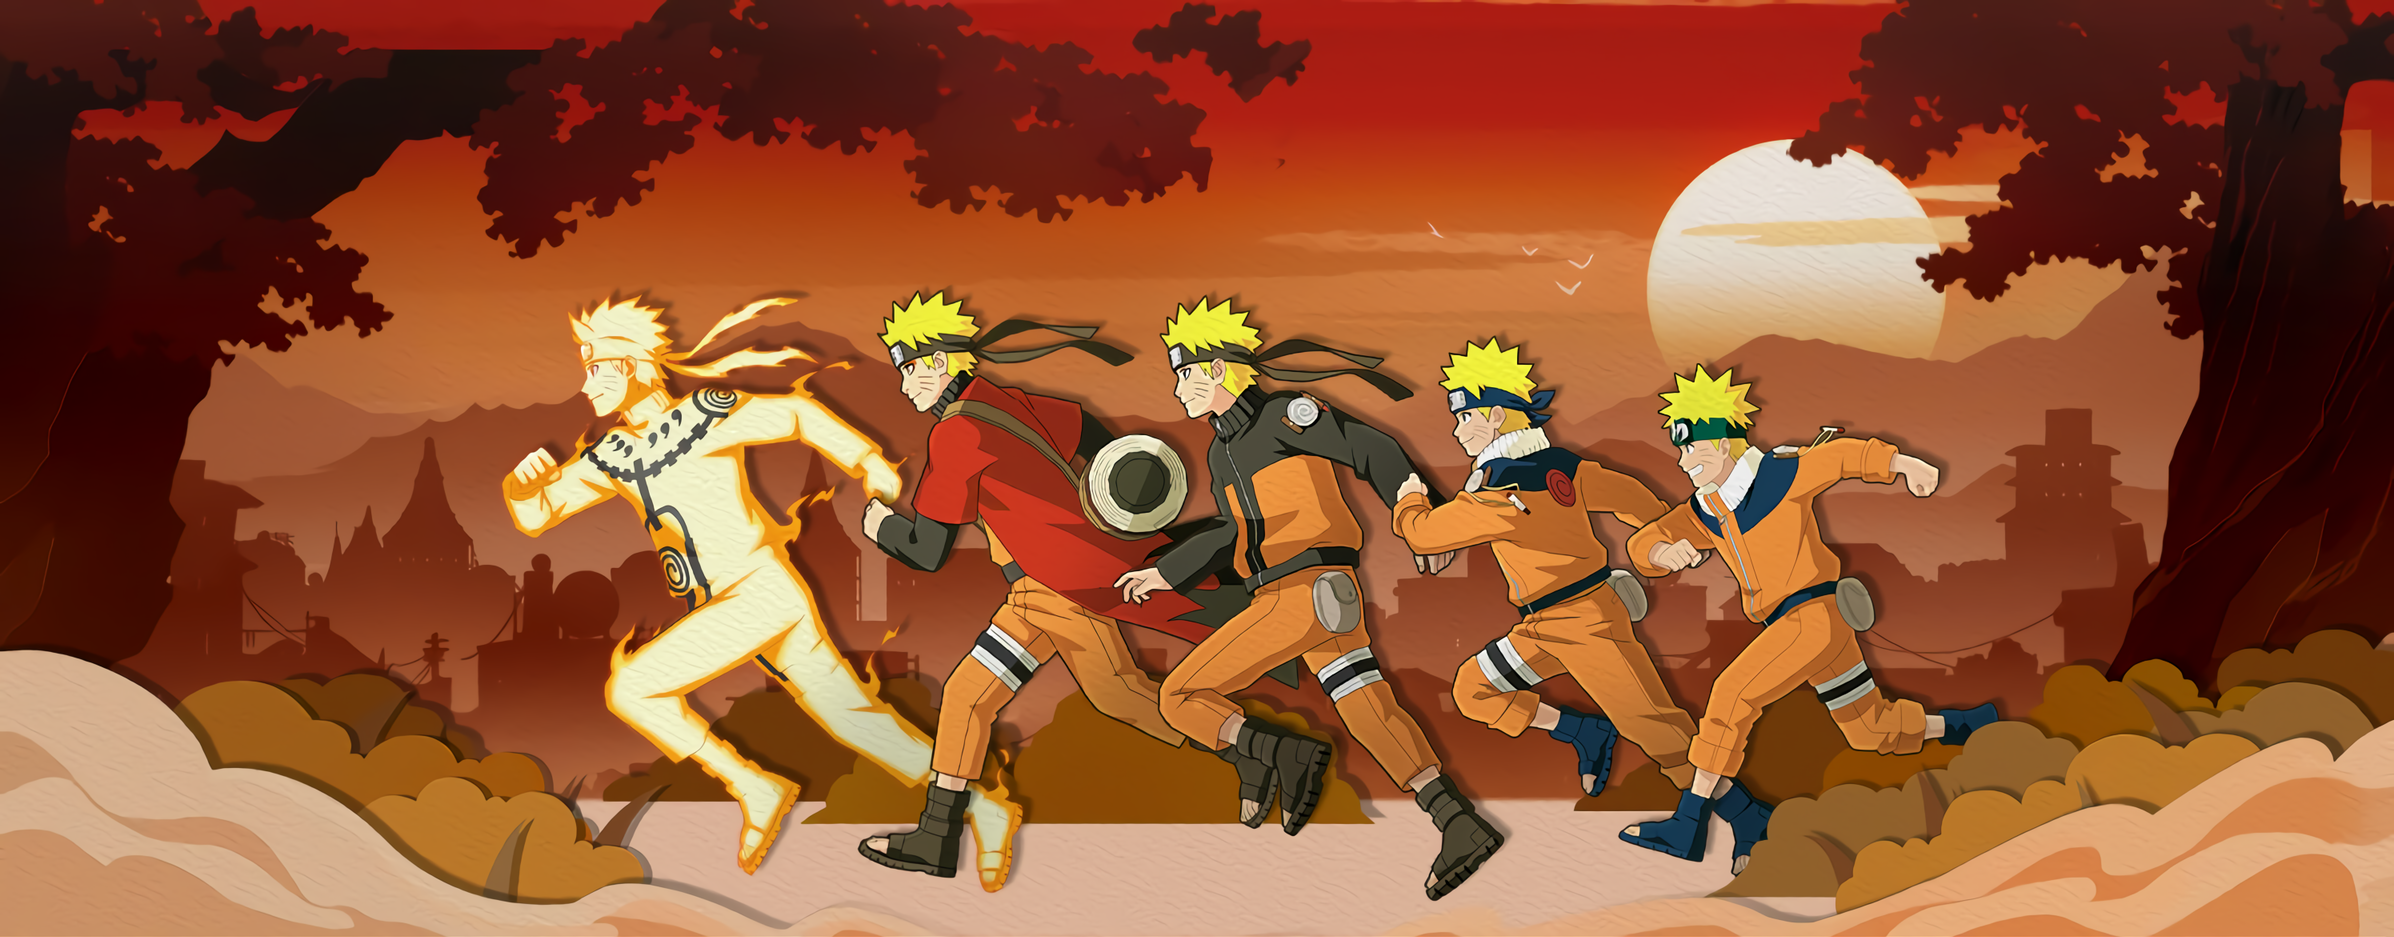 Wallpaper Naruto, NARUTO, Uzumaki Naruto, Fanart for mobile and desktop,  section сёнэн, resolution 2404x1748 - download